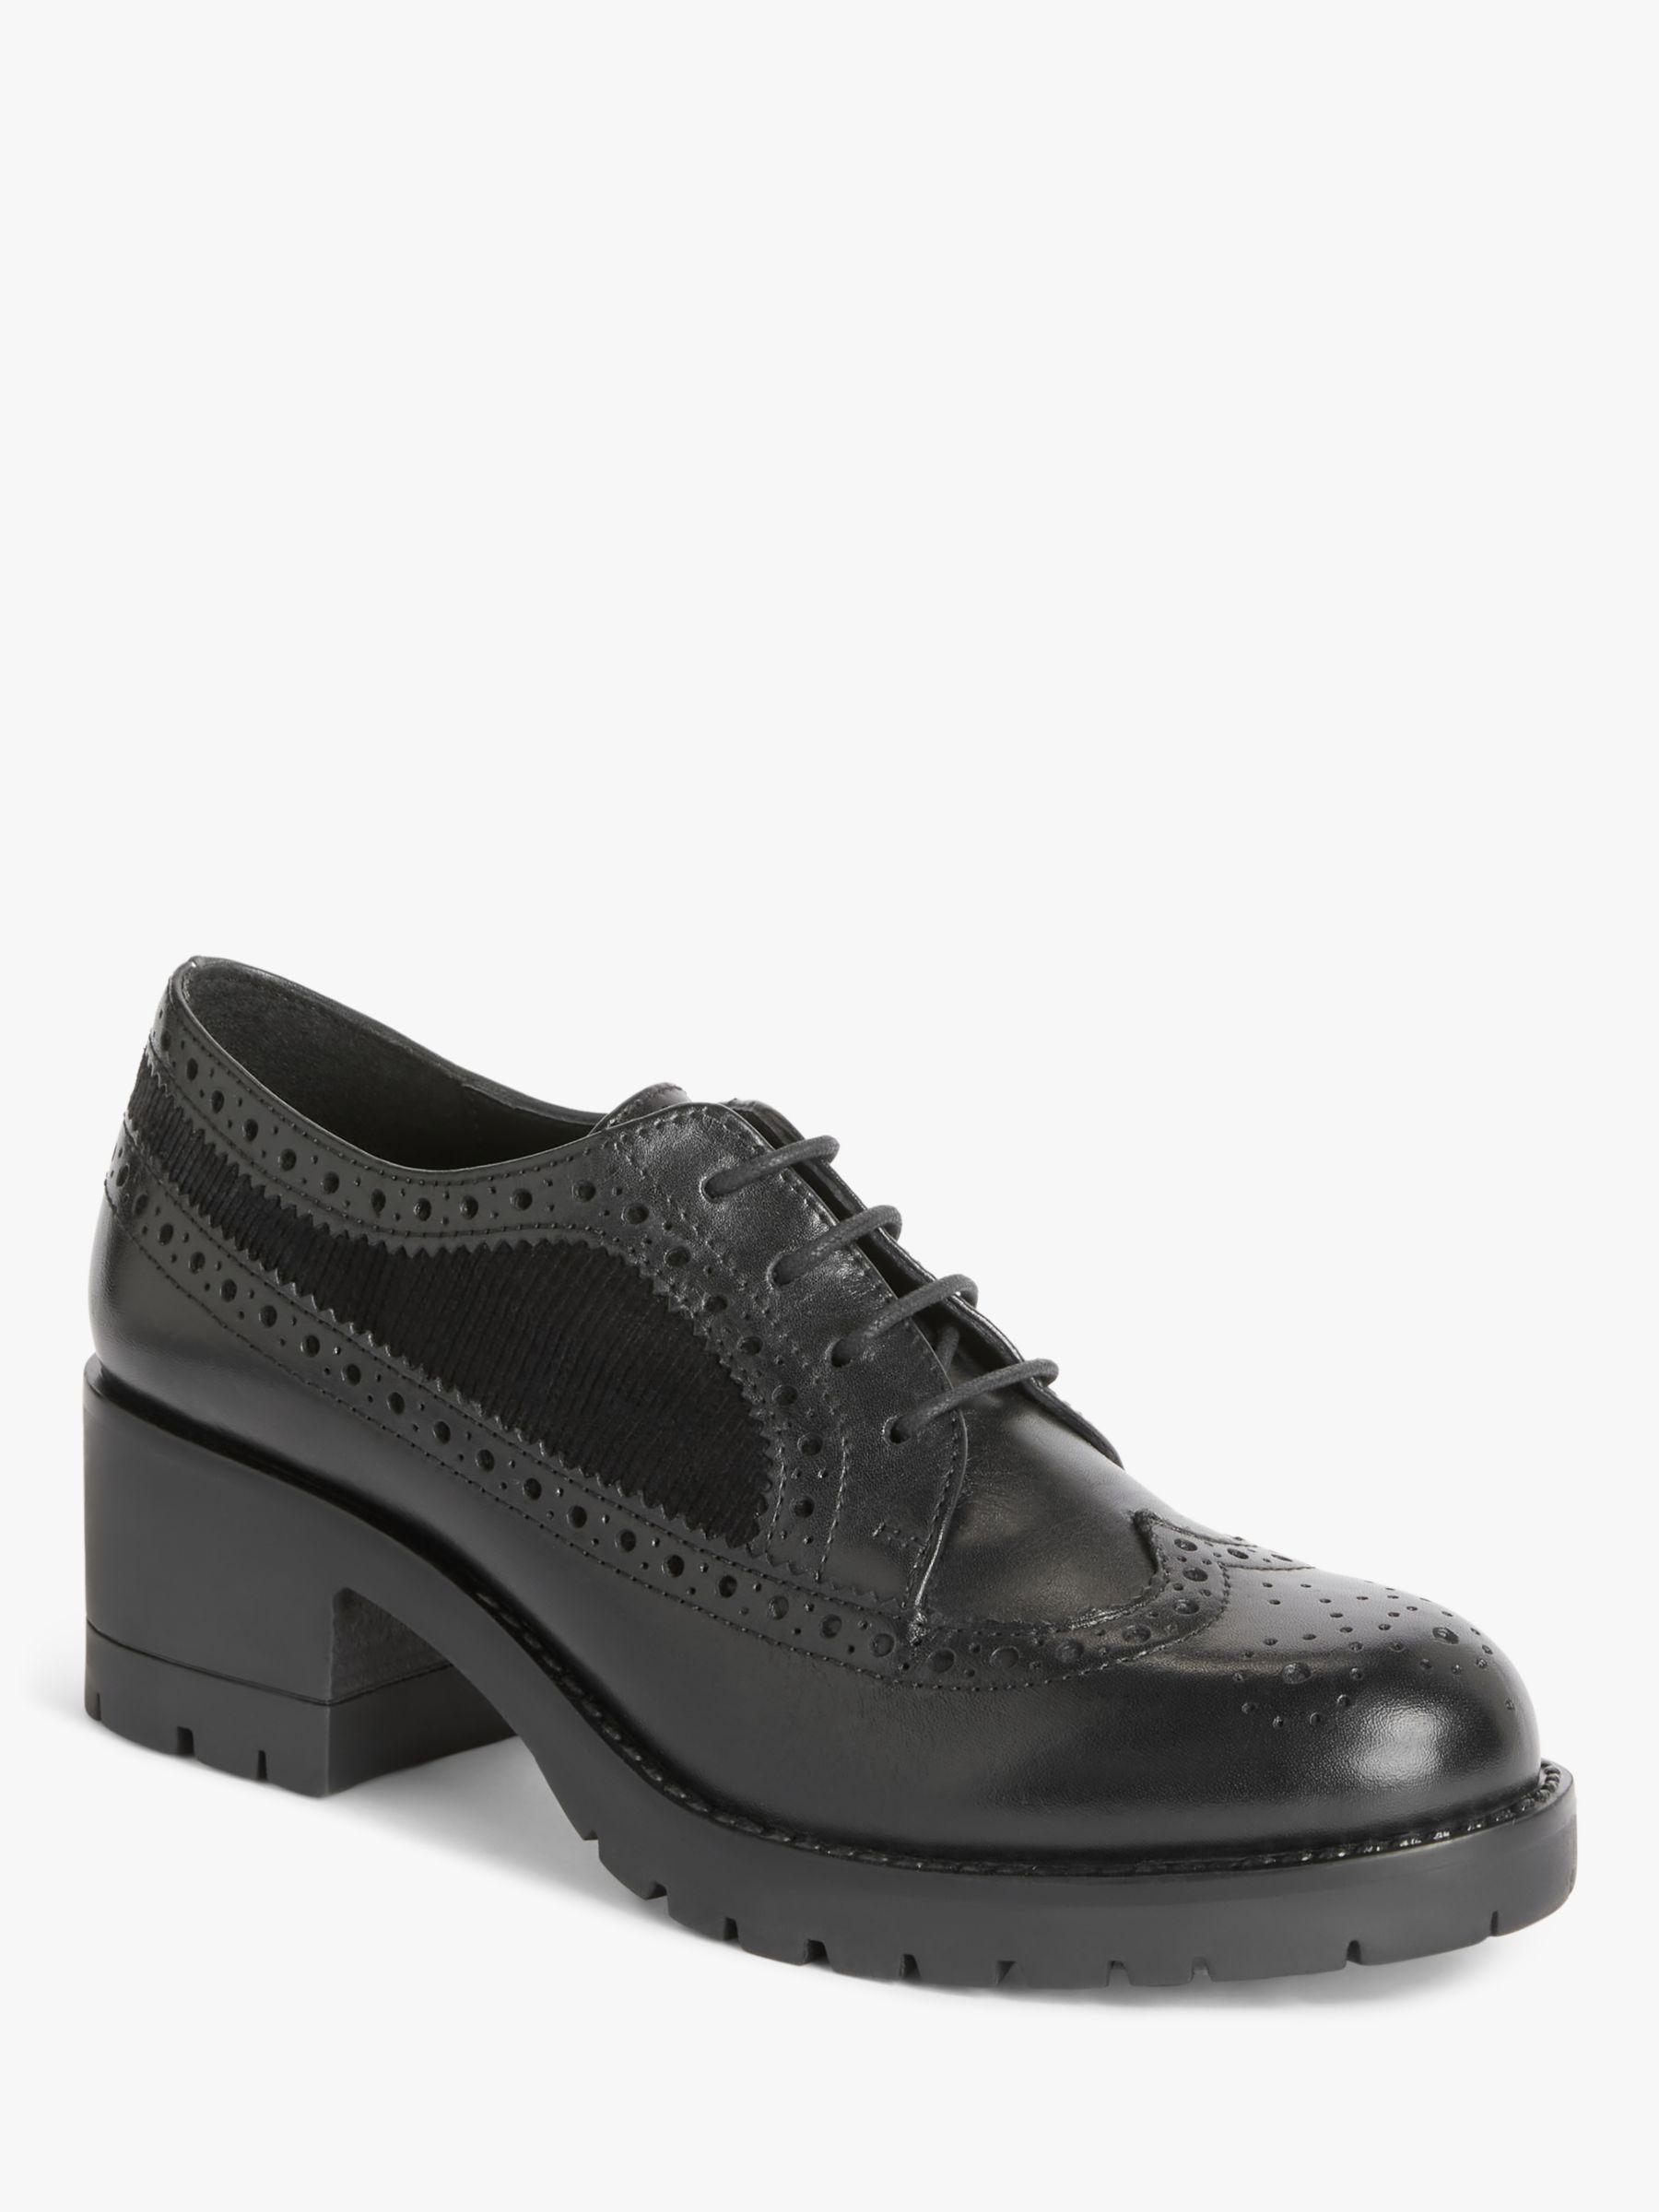 John Lewis & Partners Flavia Leather Heeled Brogue Shoes, Black at John ...